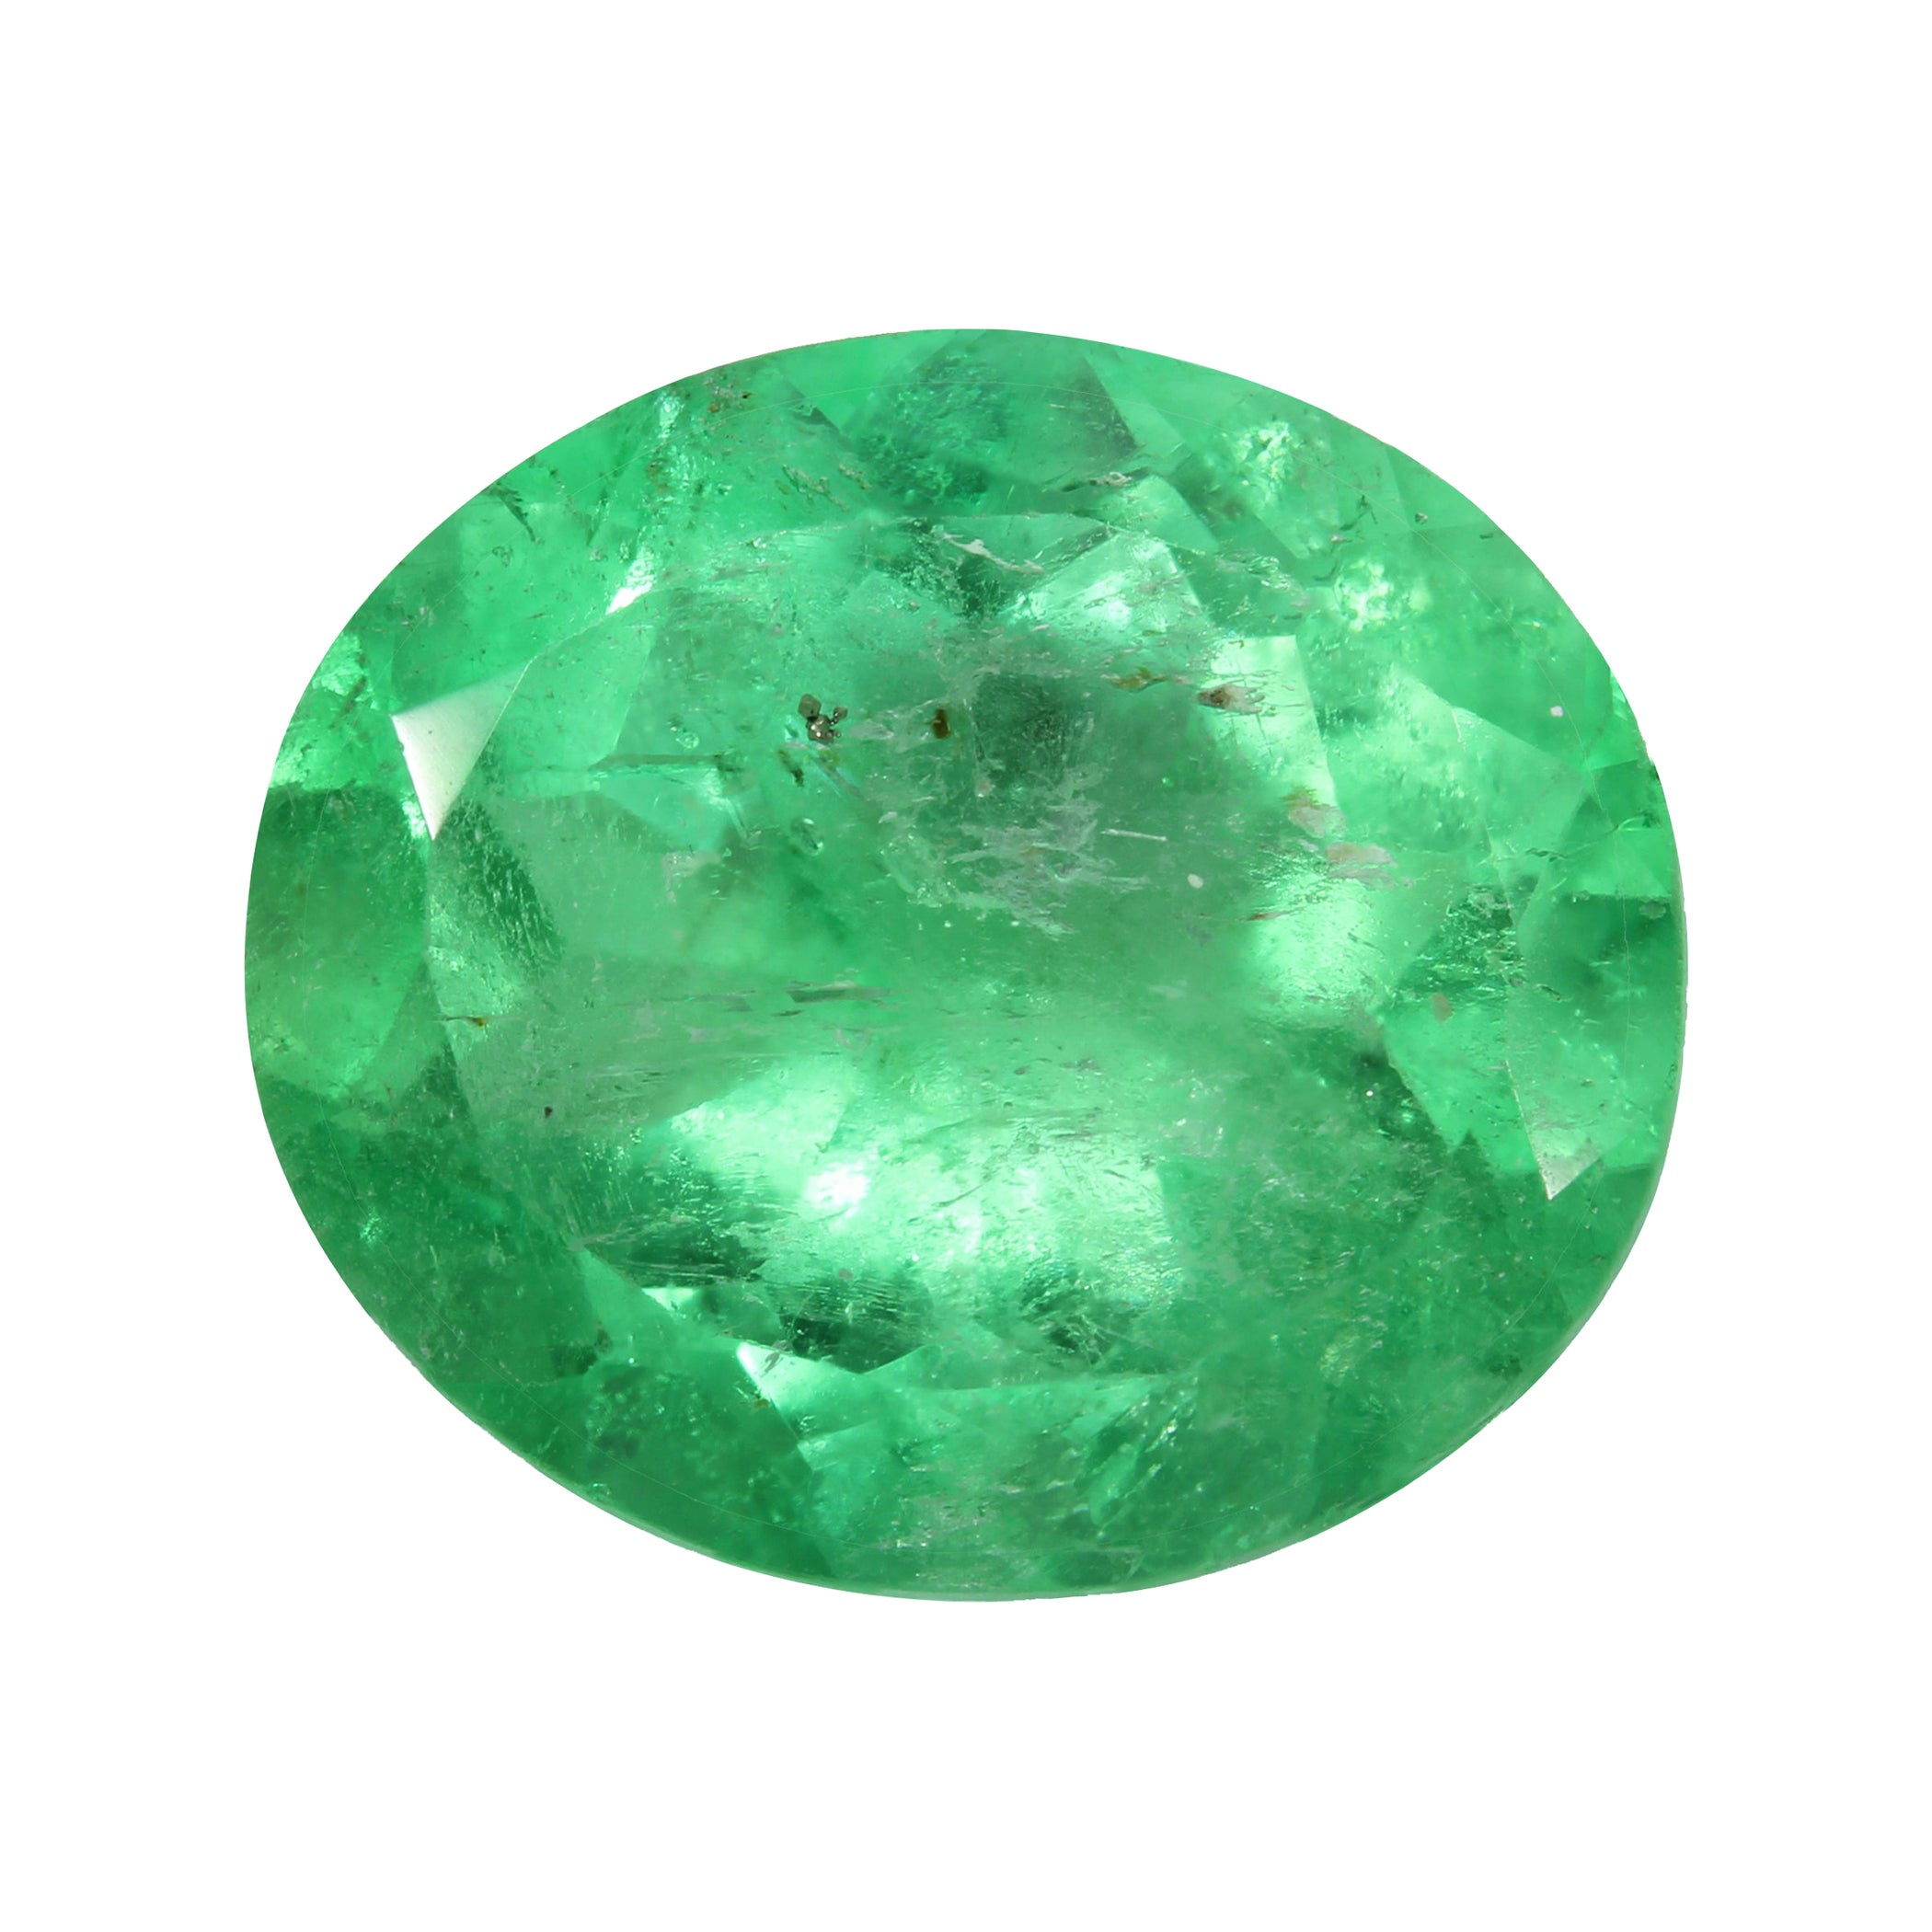 2.88 Carat Muzo Oval Emerald GIA Certified